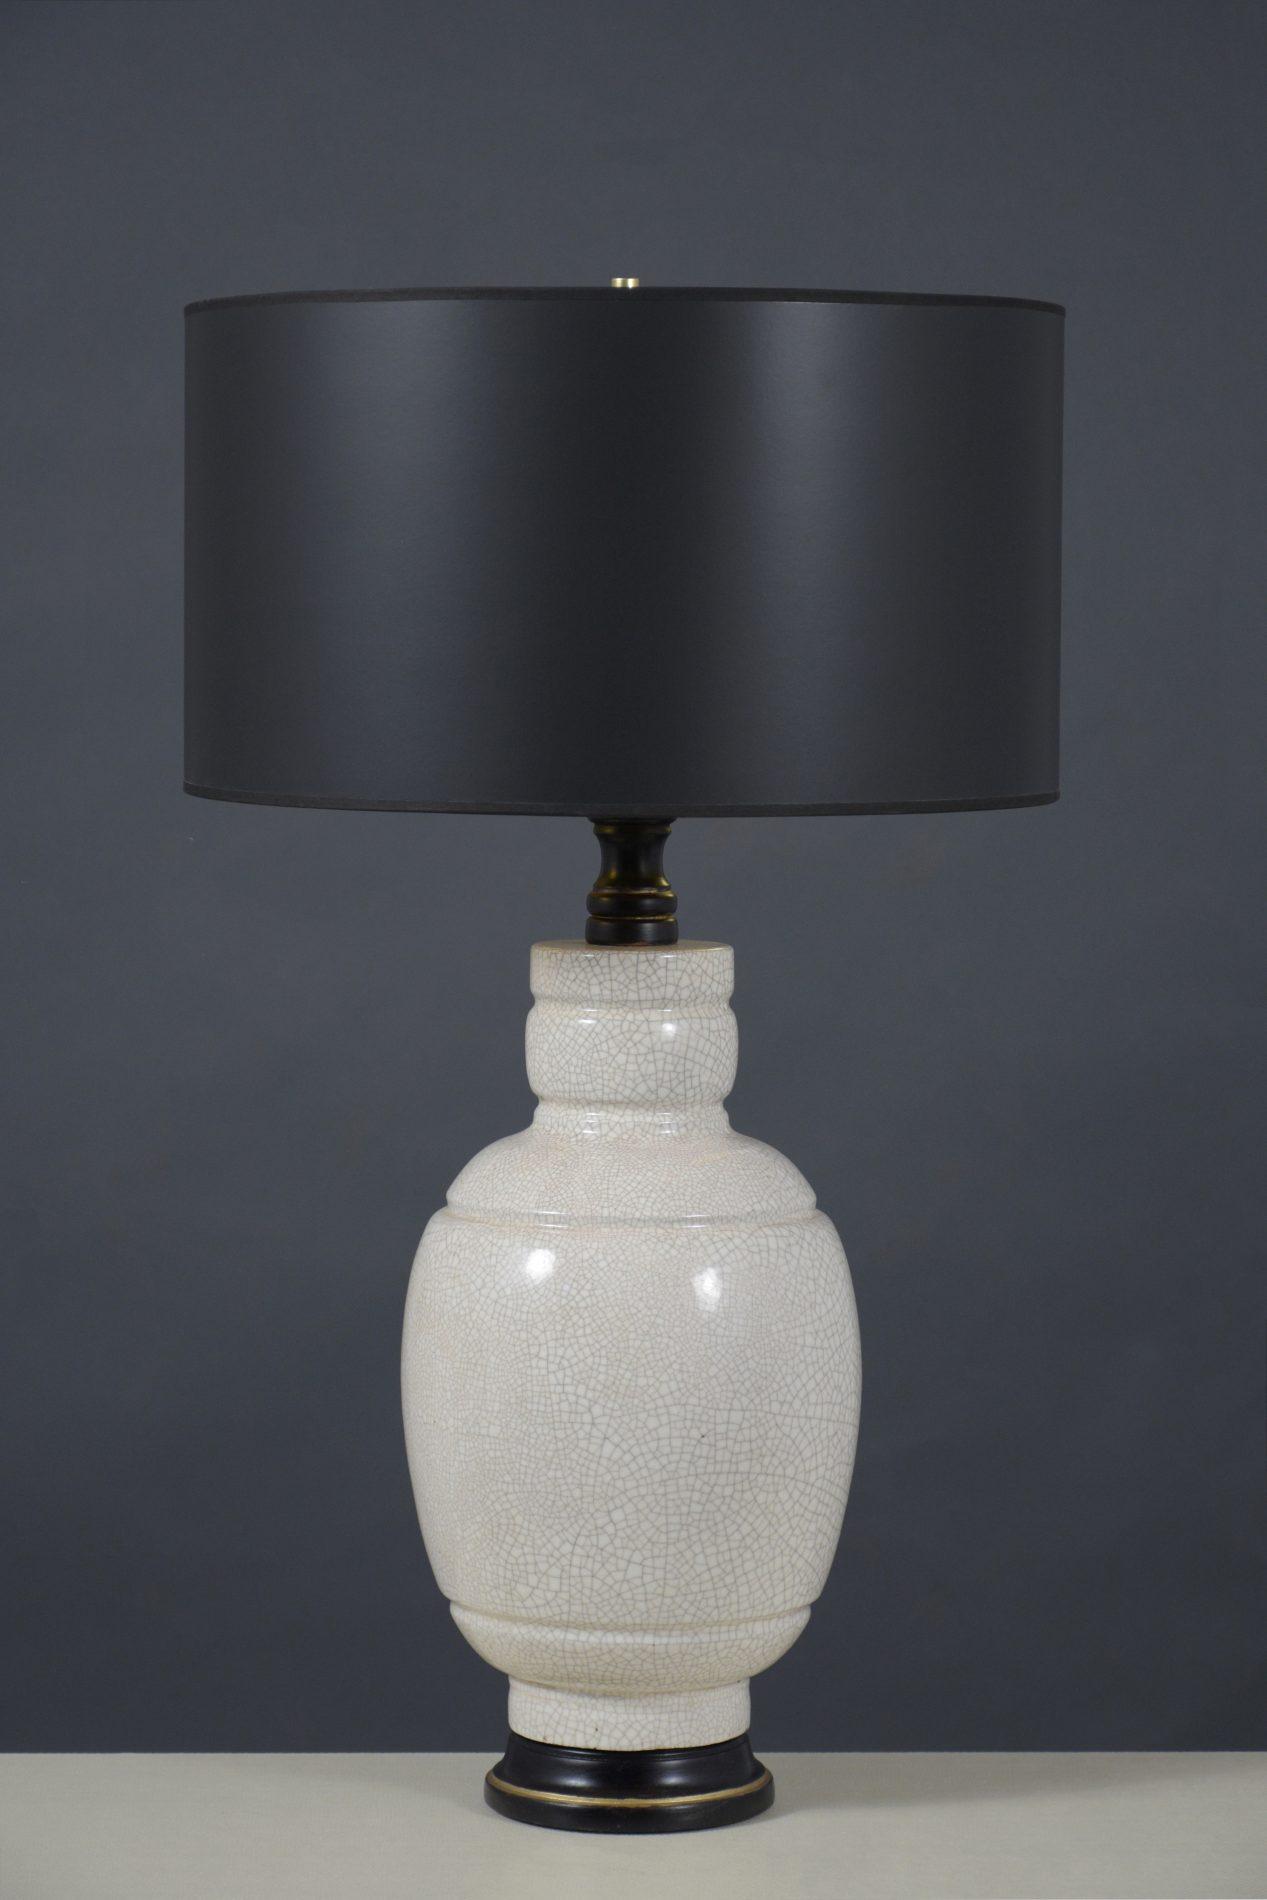 Restored 1960s Ceramic Table Lamps with Glazed Crackled Design & Ebonized Wood Base